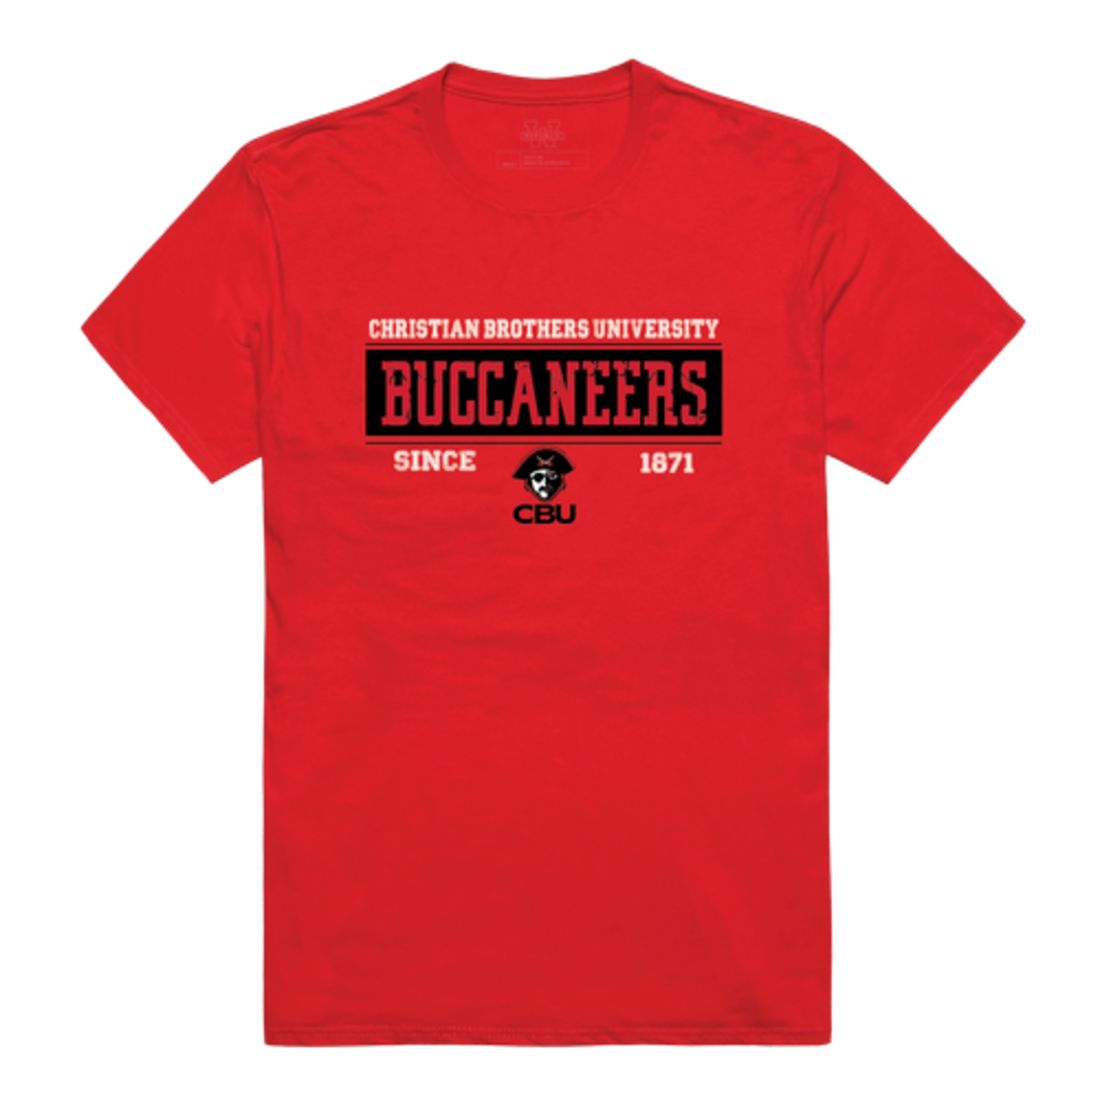 Christian Brothers University Buccaneers Established T-Shirt Tee